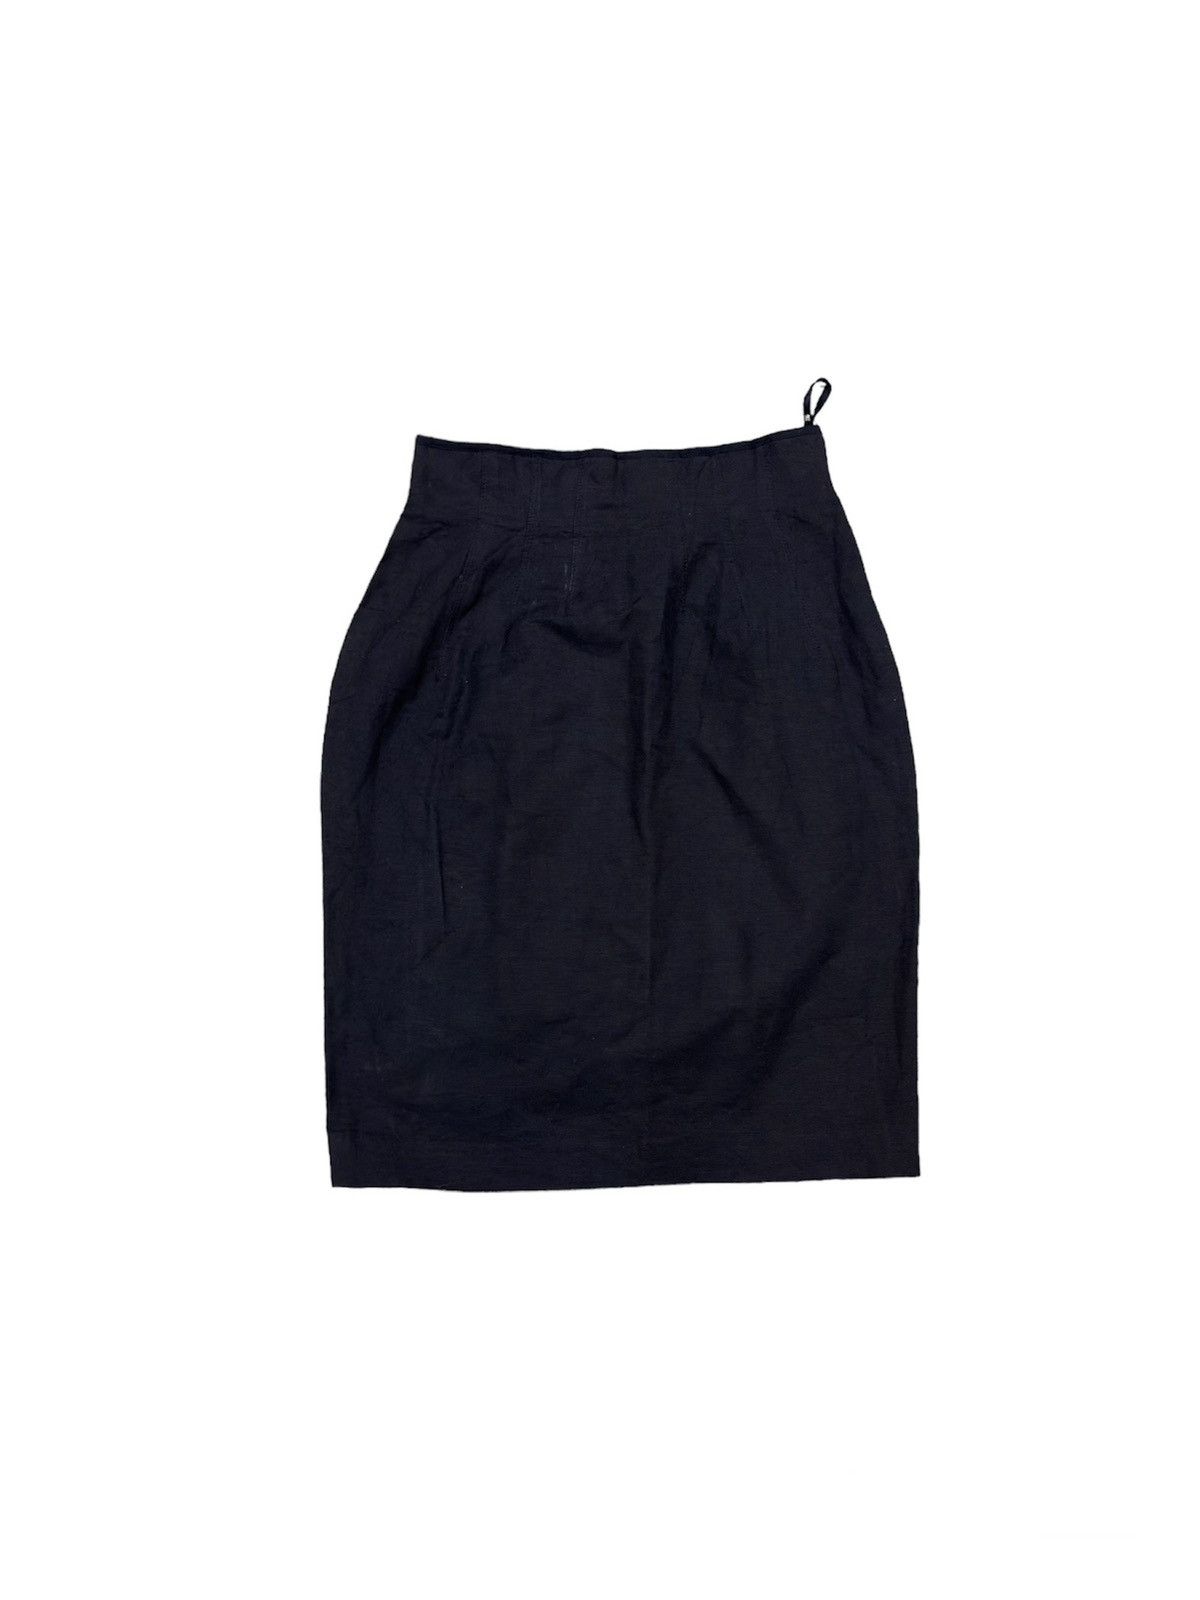 Vintage Jean Paul Gaultier Mini Skirt - 2